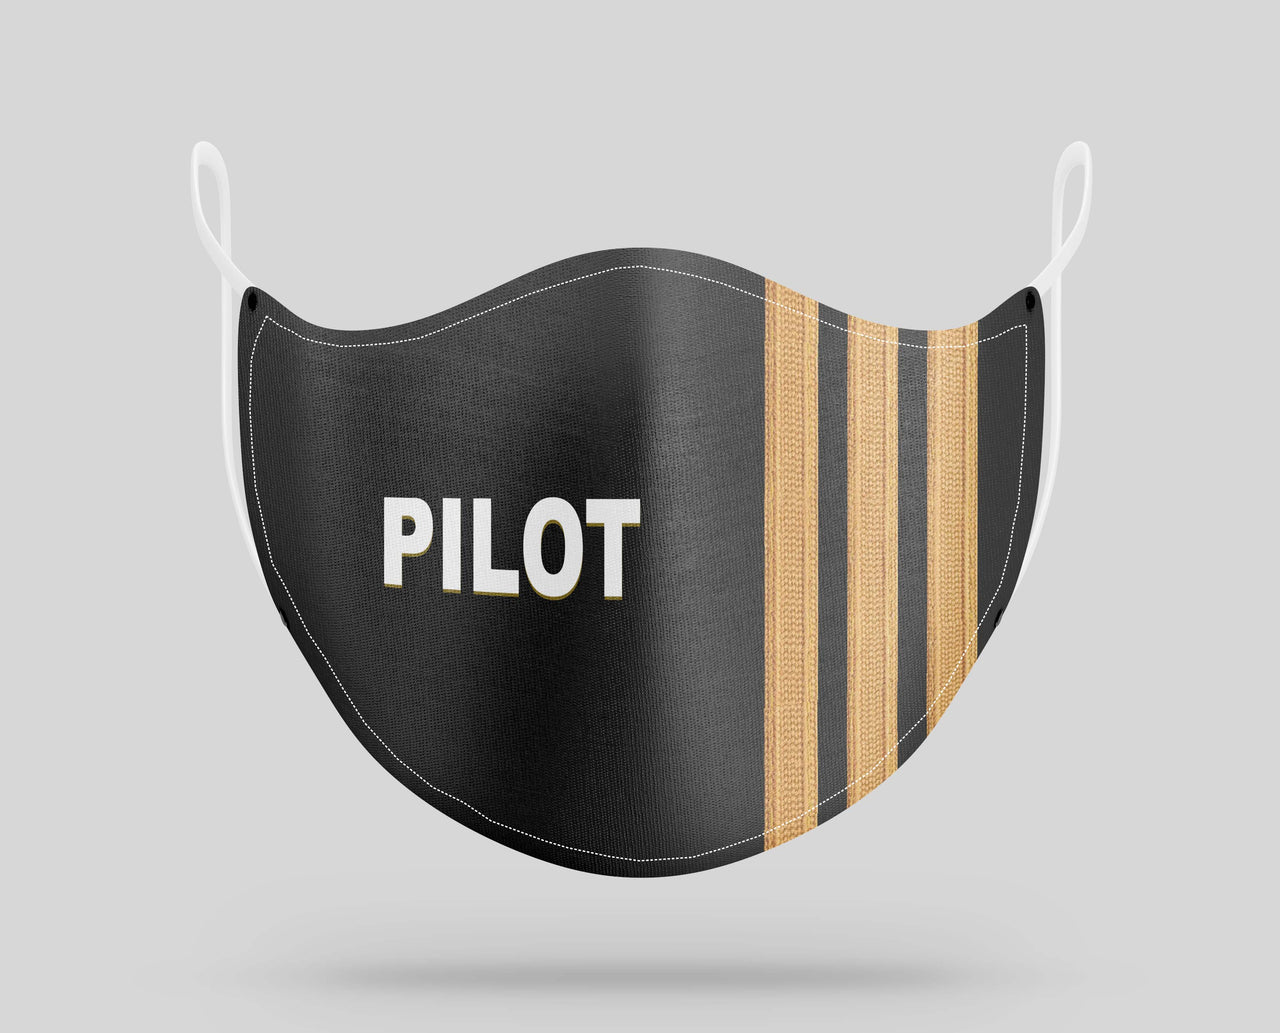 Special Edition Pilot & Stripes Designed Face Masks